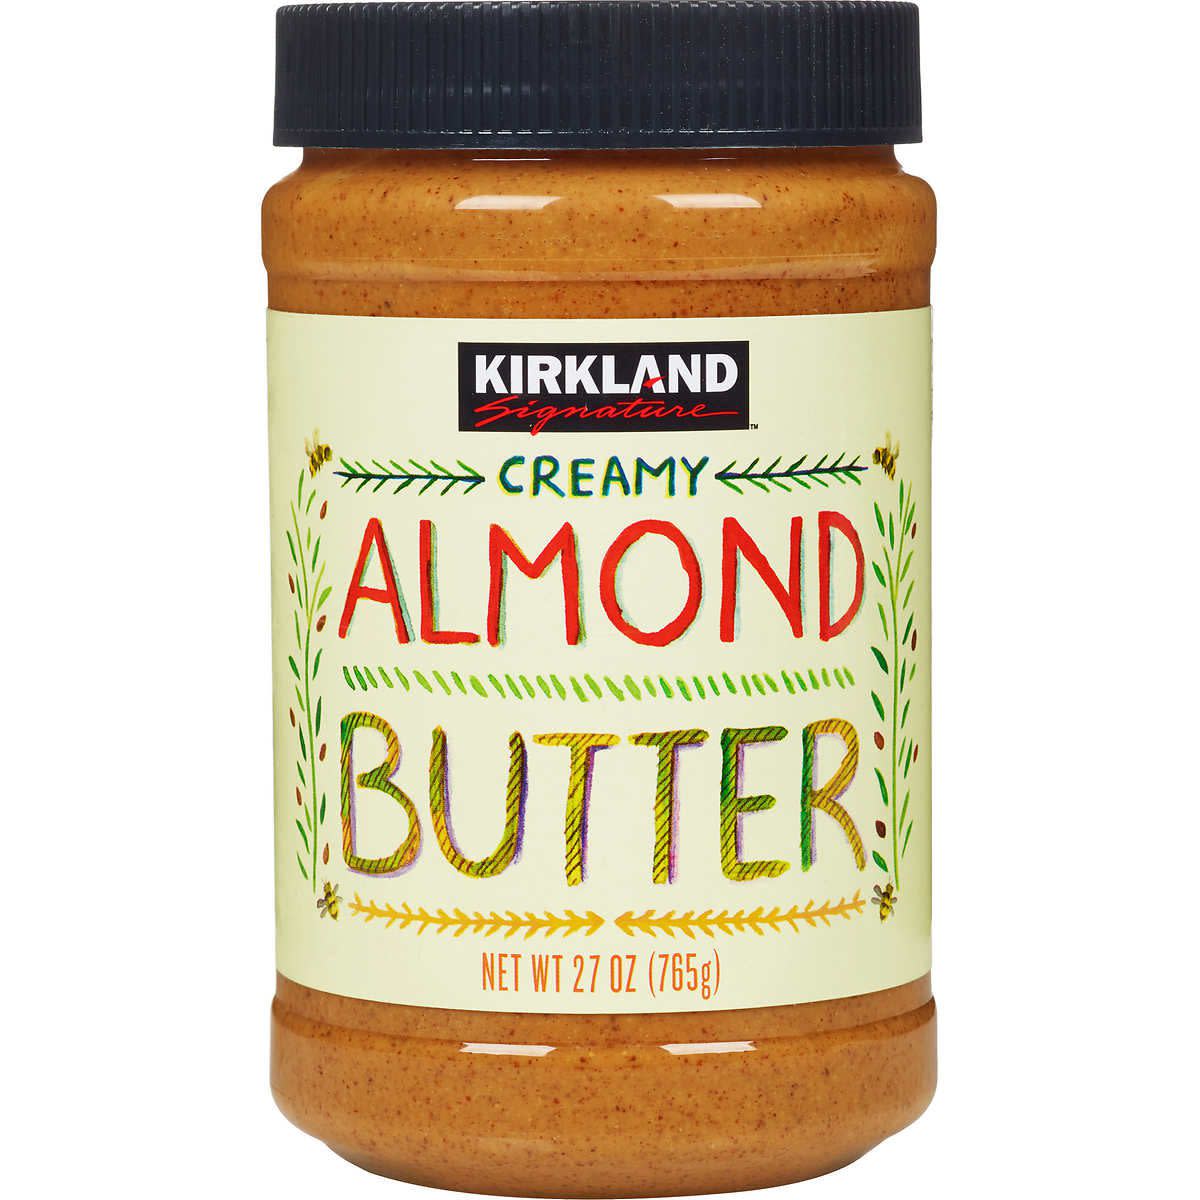 Kirkland Signature Creamy Almond Butter, 27 oz.